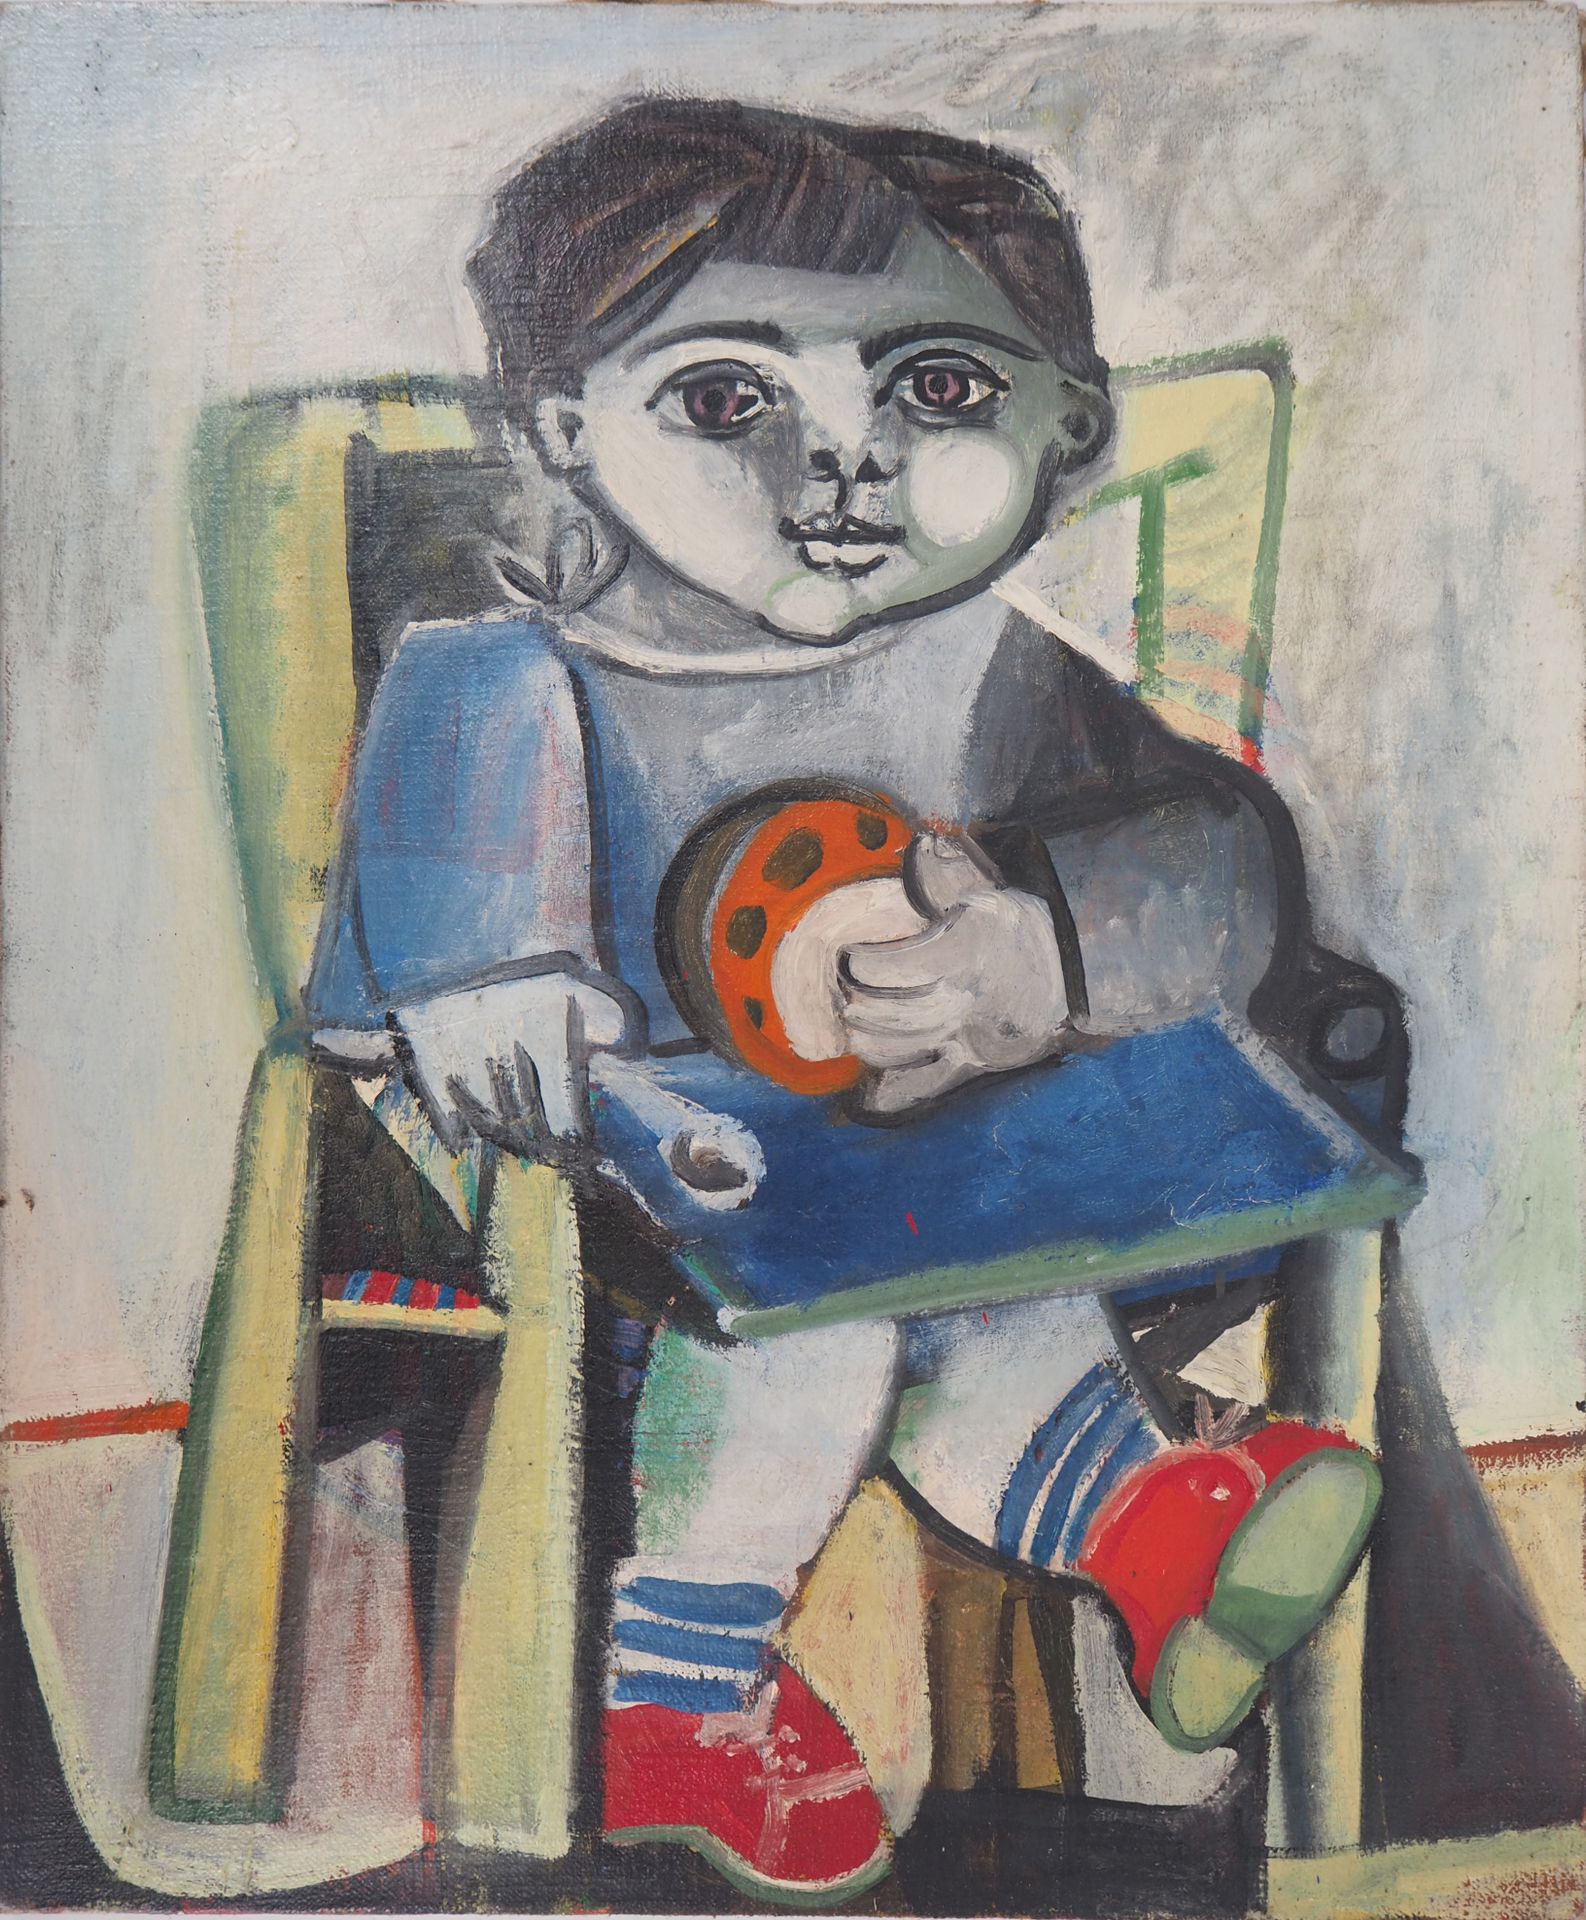 Carlos CARNERO Carlos CARNERO (1922-1980)

Omaggio a Picasso: Bambino su una sed&hellip;